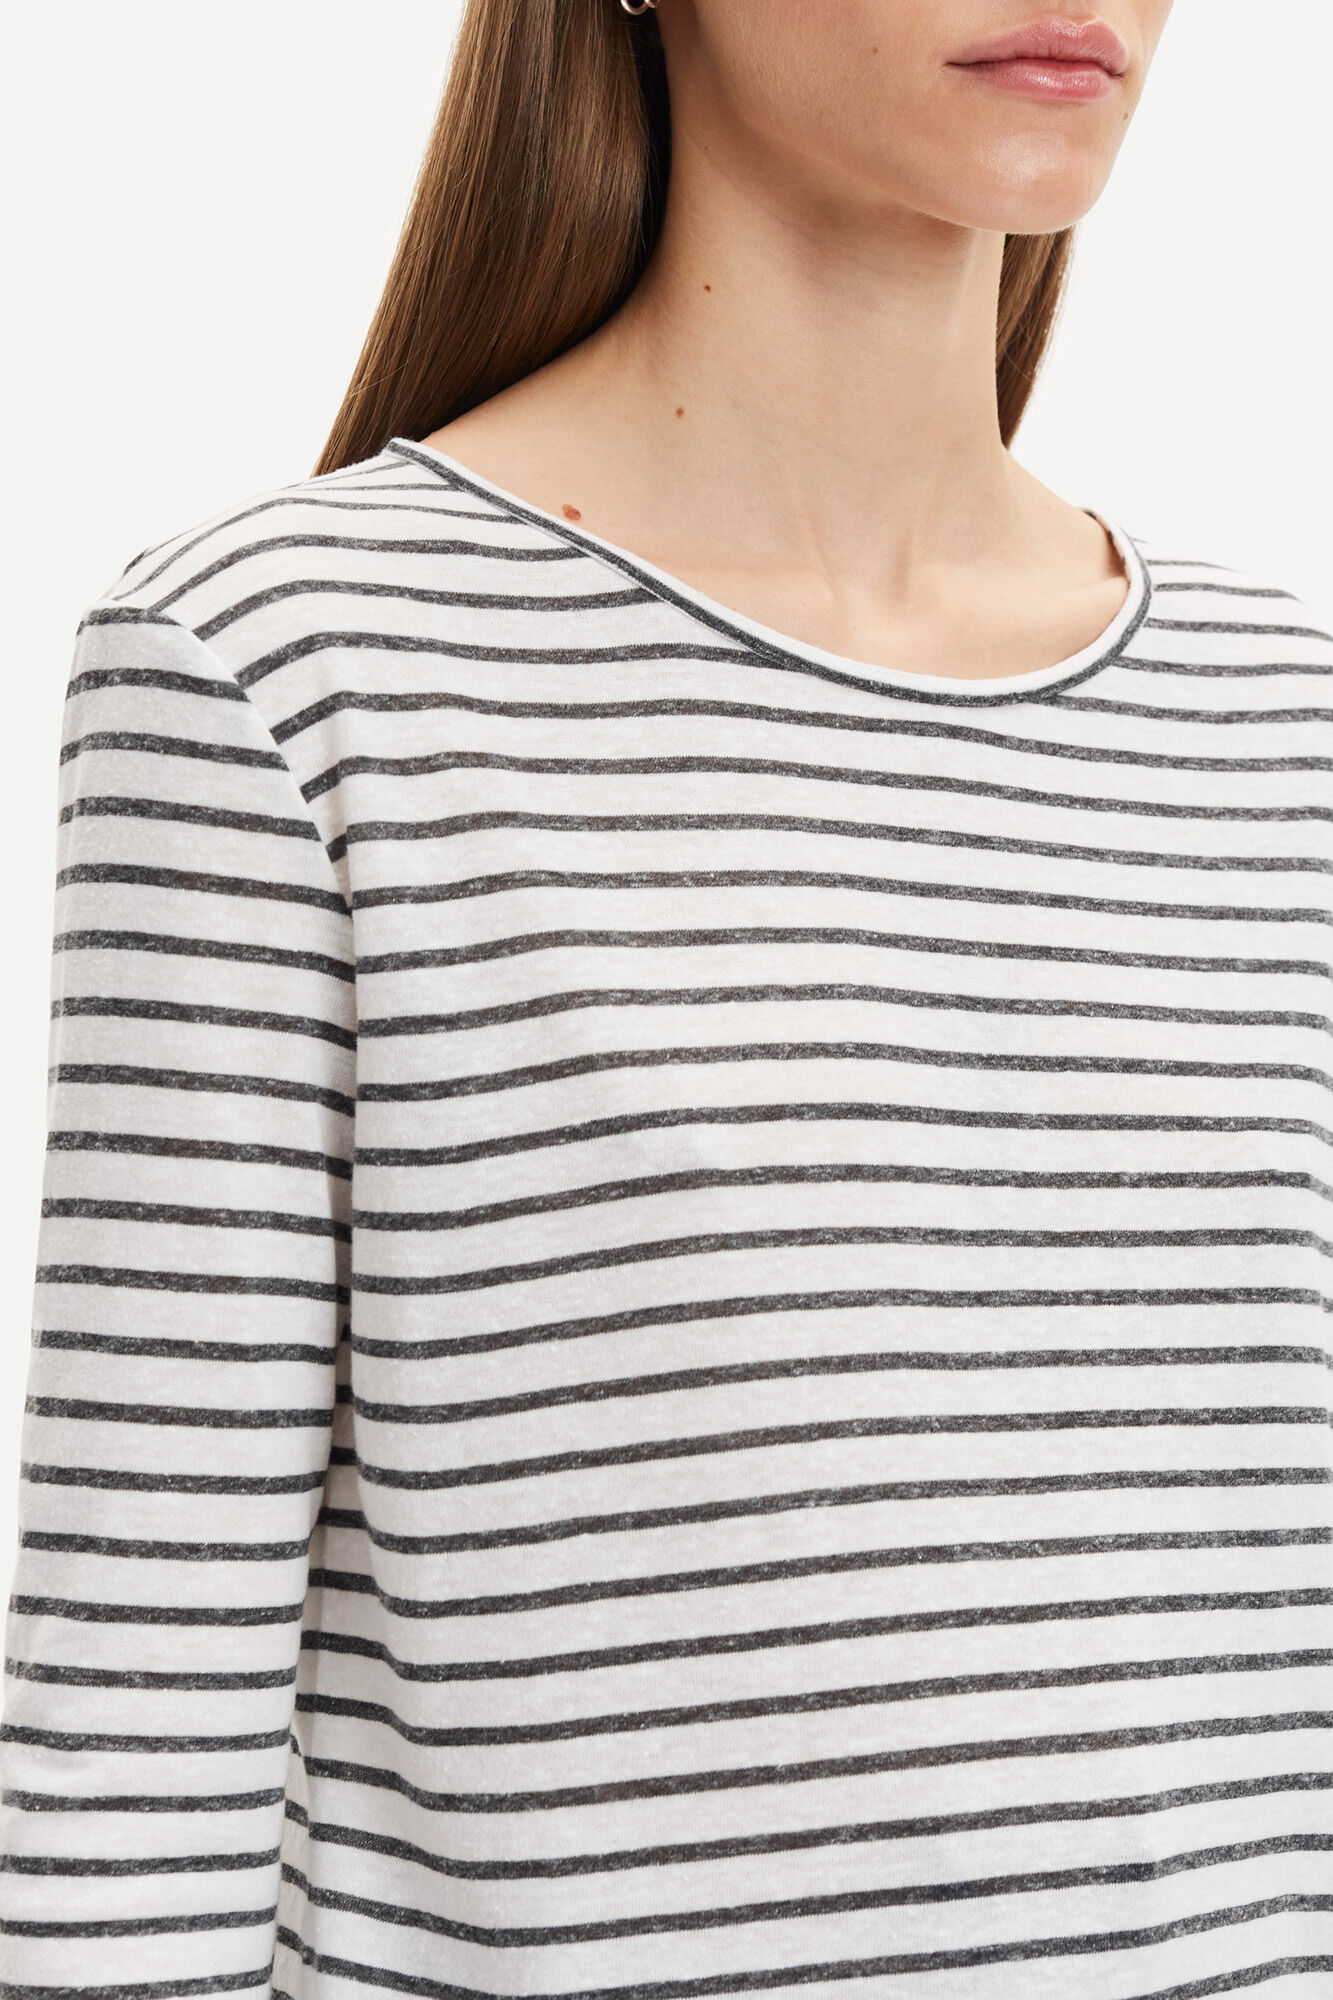 Fashion Formal Shirts Long Sleeve Shirts Samsøe & samsøe Sams\u00f8e & sams\u00f8e Long Sleeve Shirt striped pattern casual look 